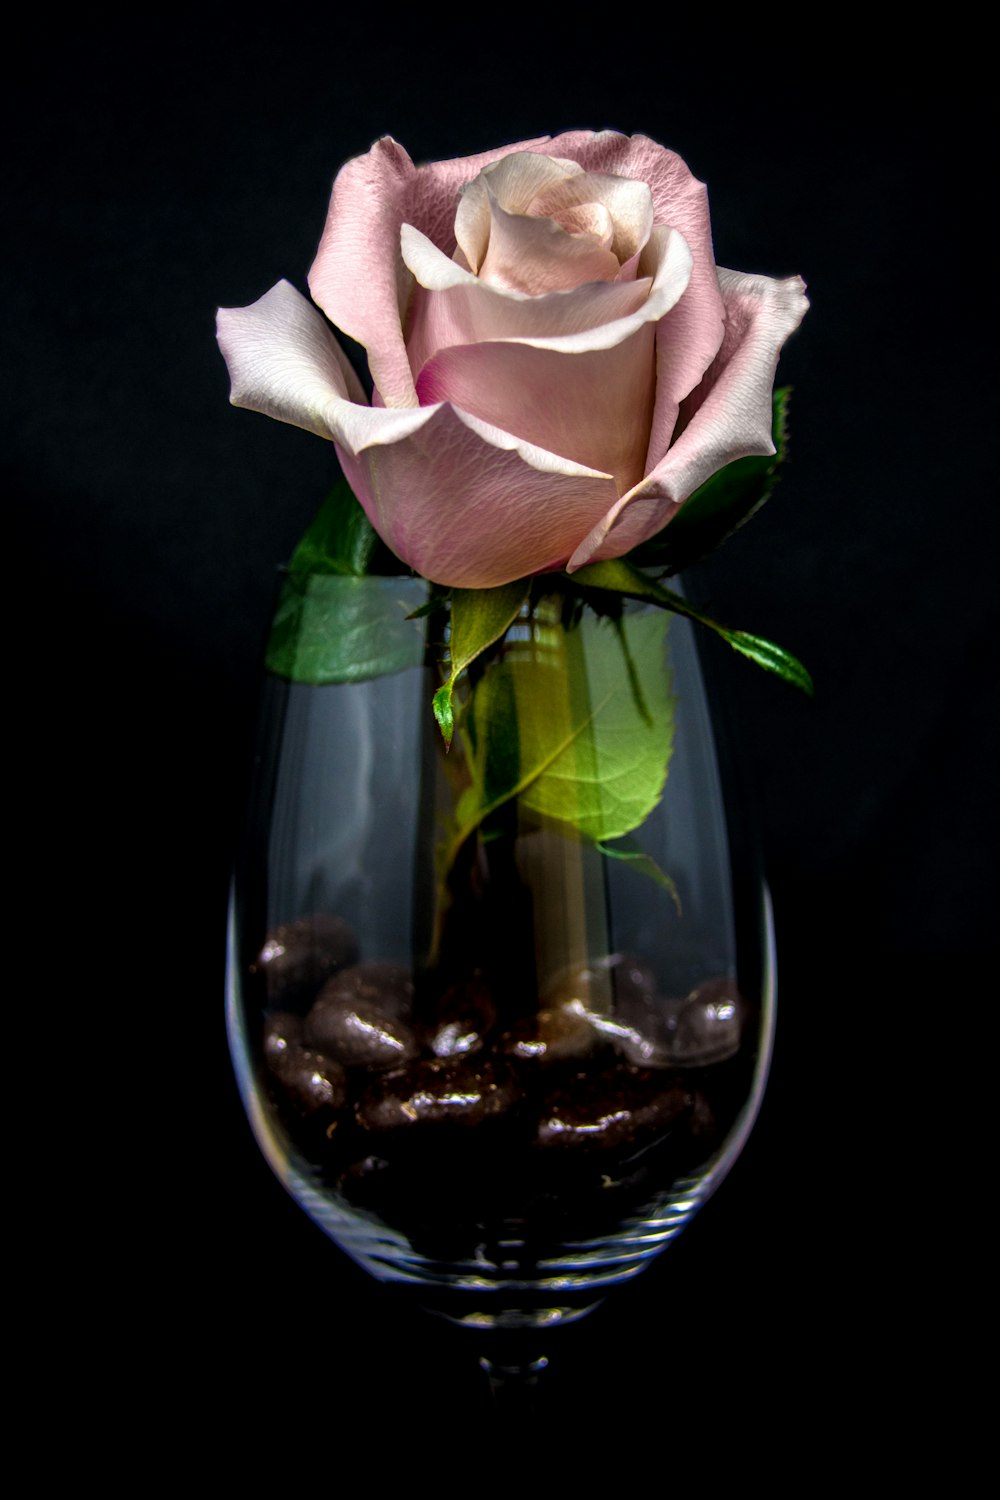 pink rose flower inside wine glass